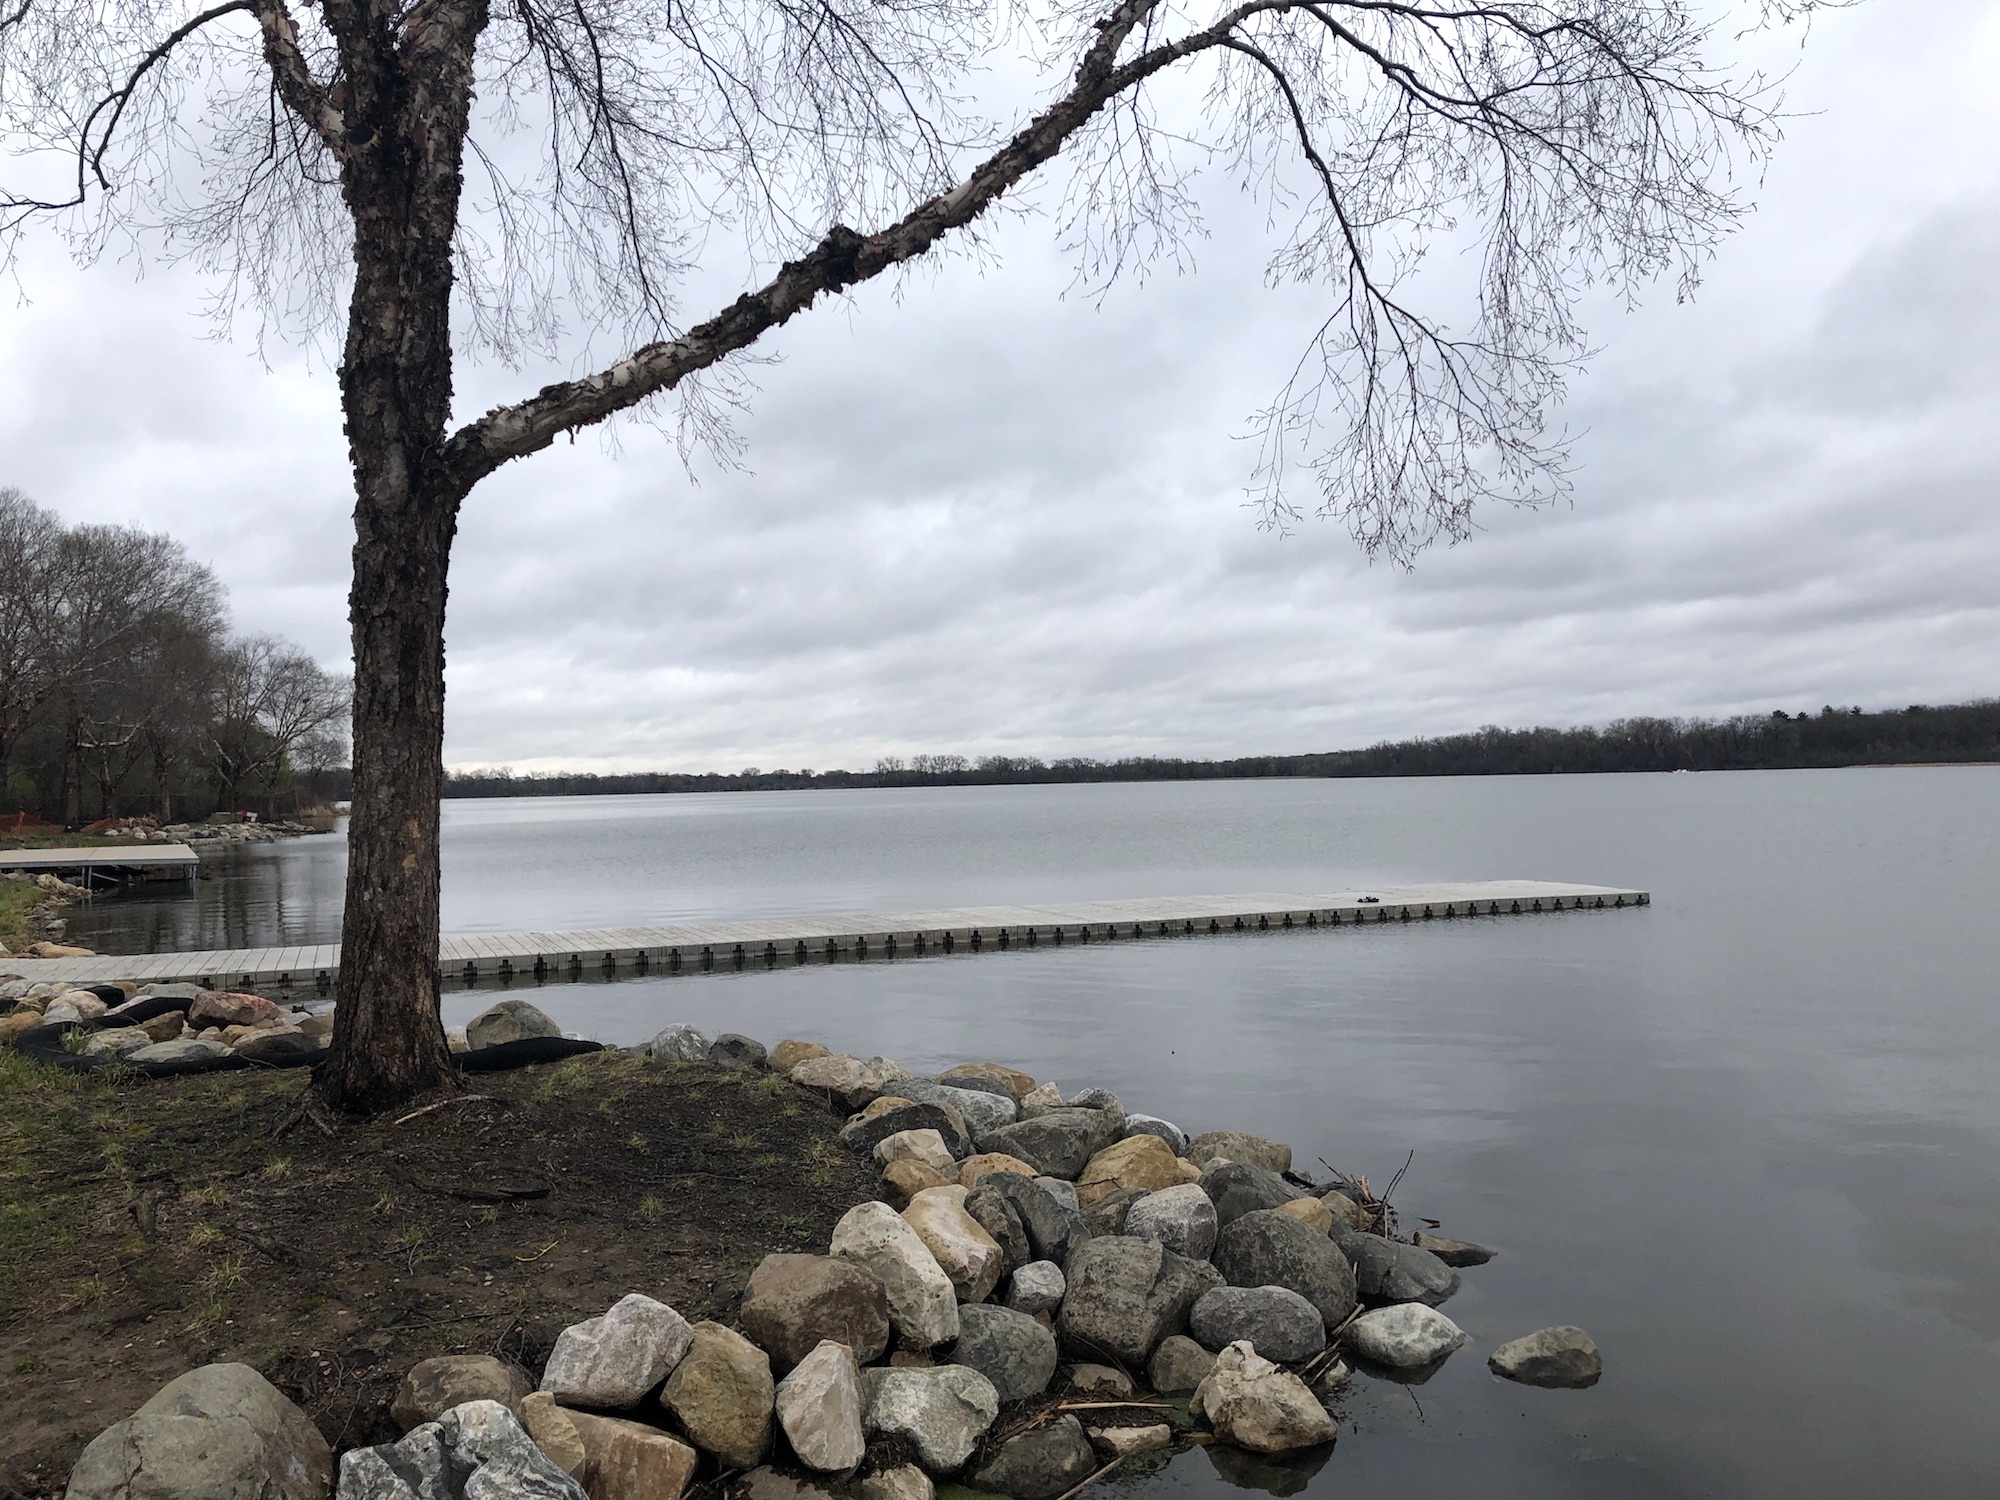 Lake Wingra on April 23, 2019.